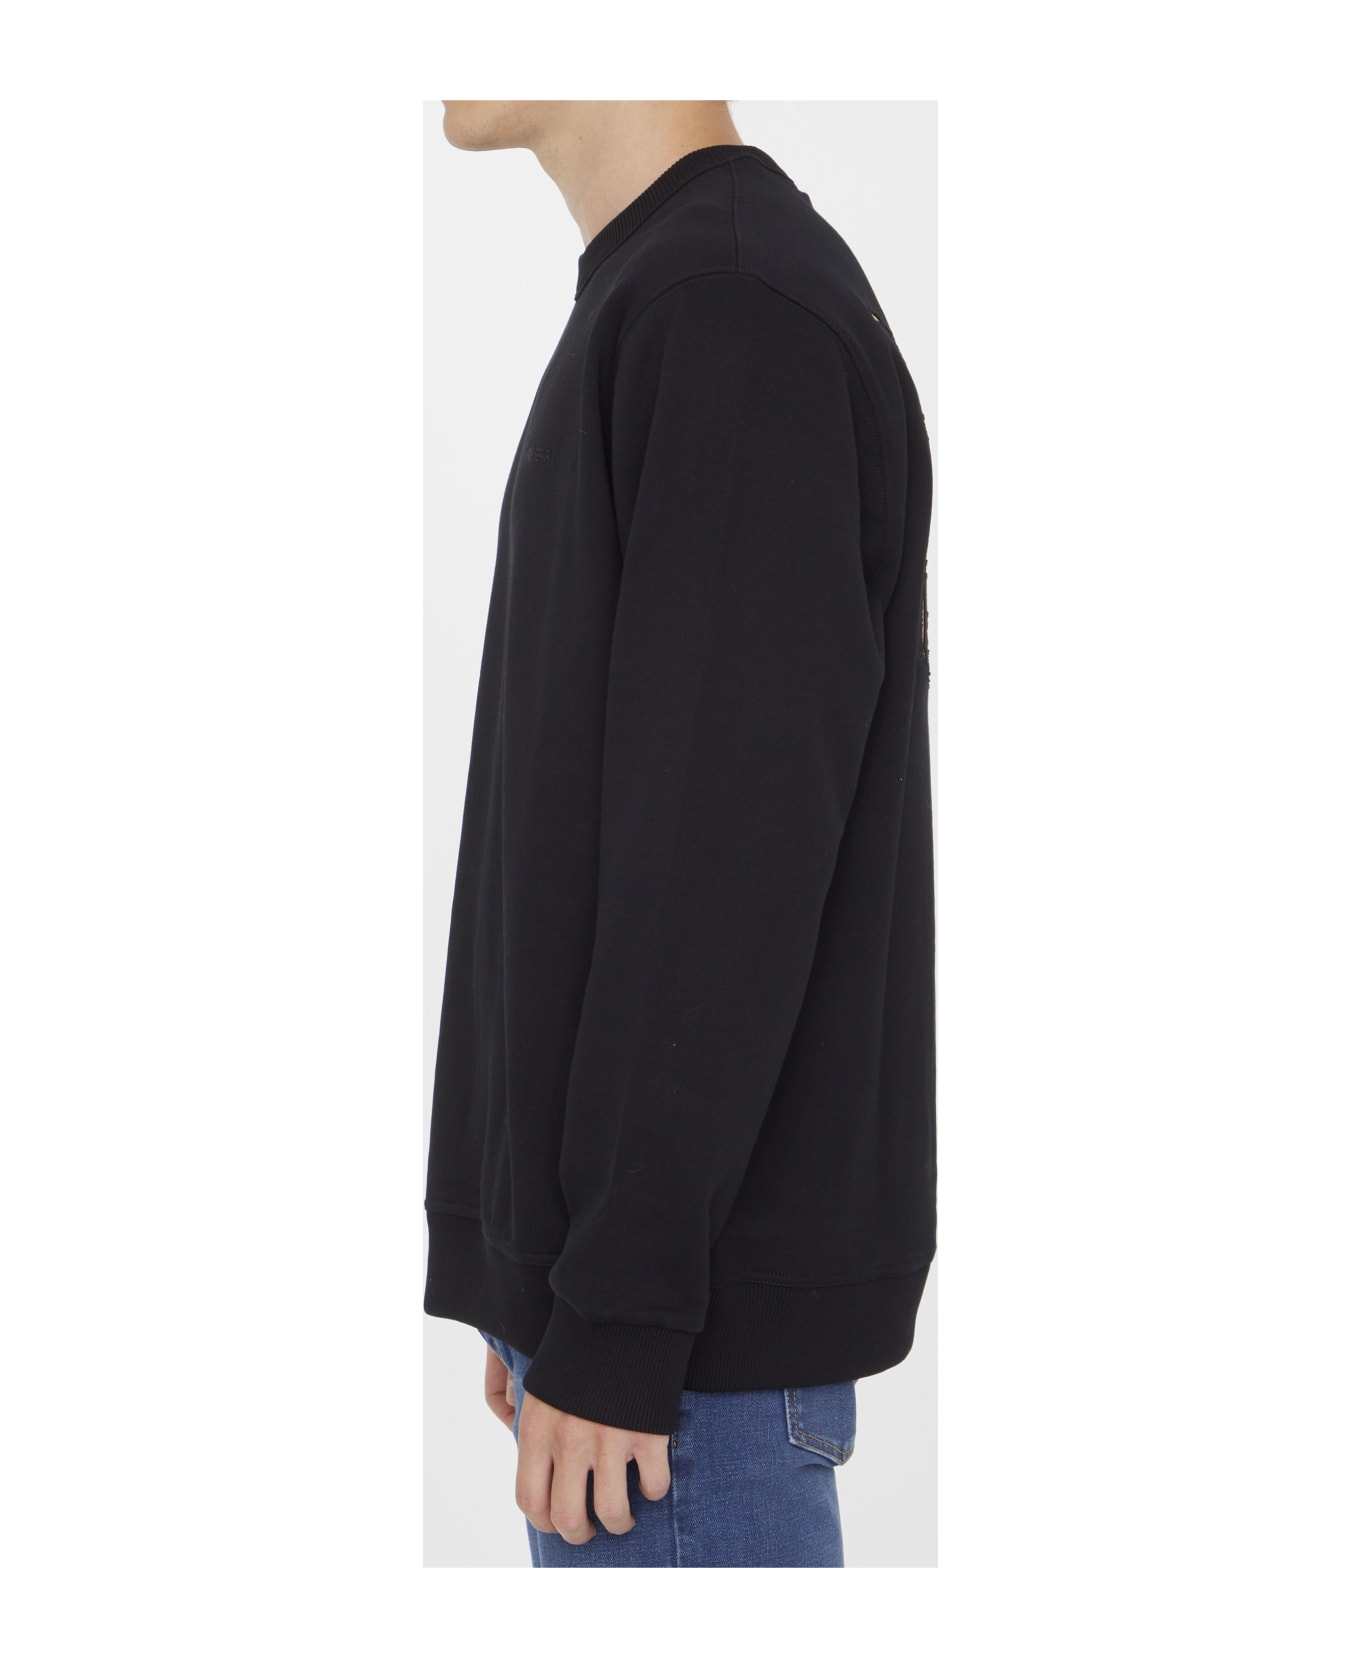 Burberry Ekd Check Sweatshirt - Black